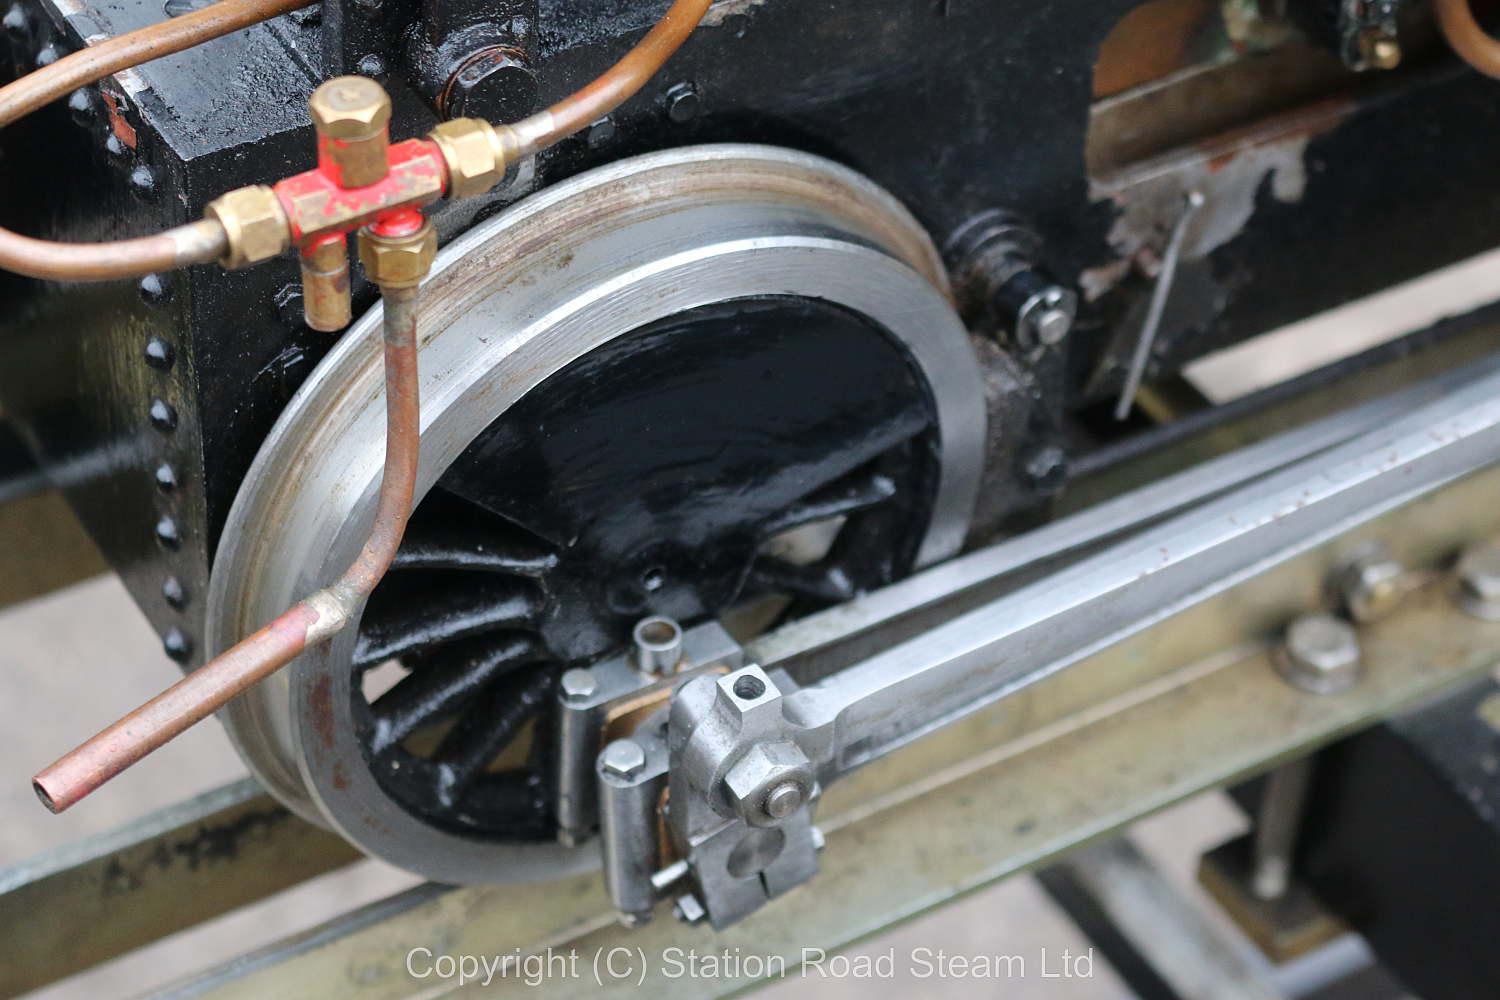 7 1/4 inch gauge Midland Railway steam motor carriage